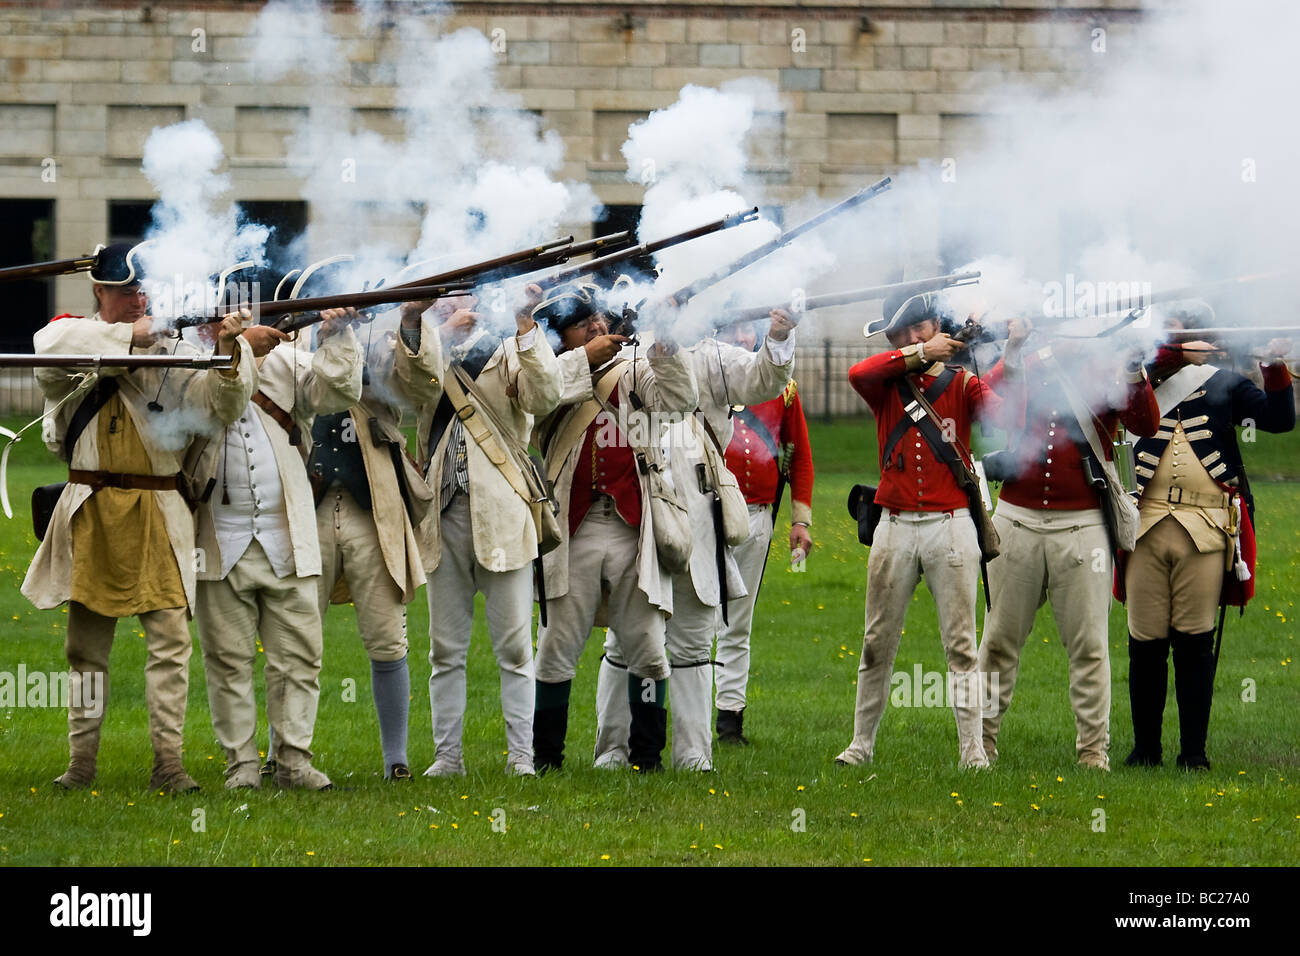 Men dressed in Revolutionary War period soldier uniforms firing muskets at Fort Adams in Newport, Rhode Island. Stock Photo